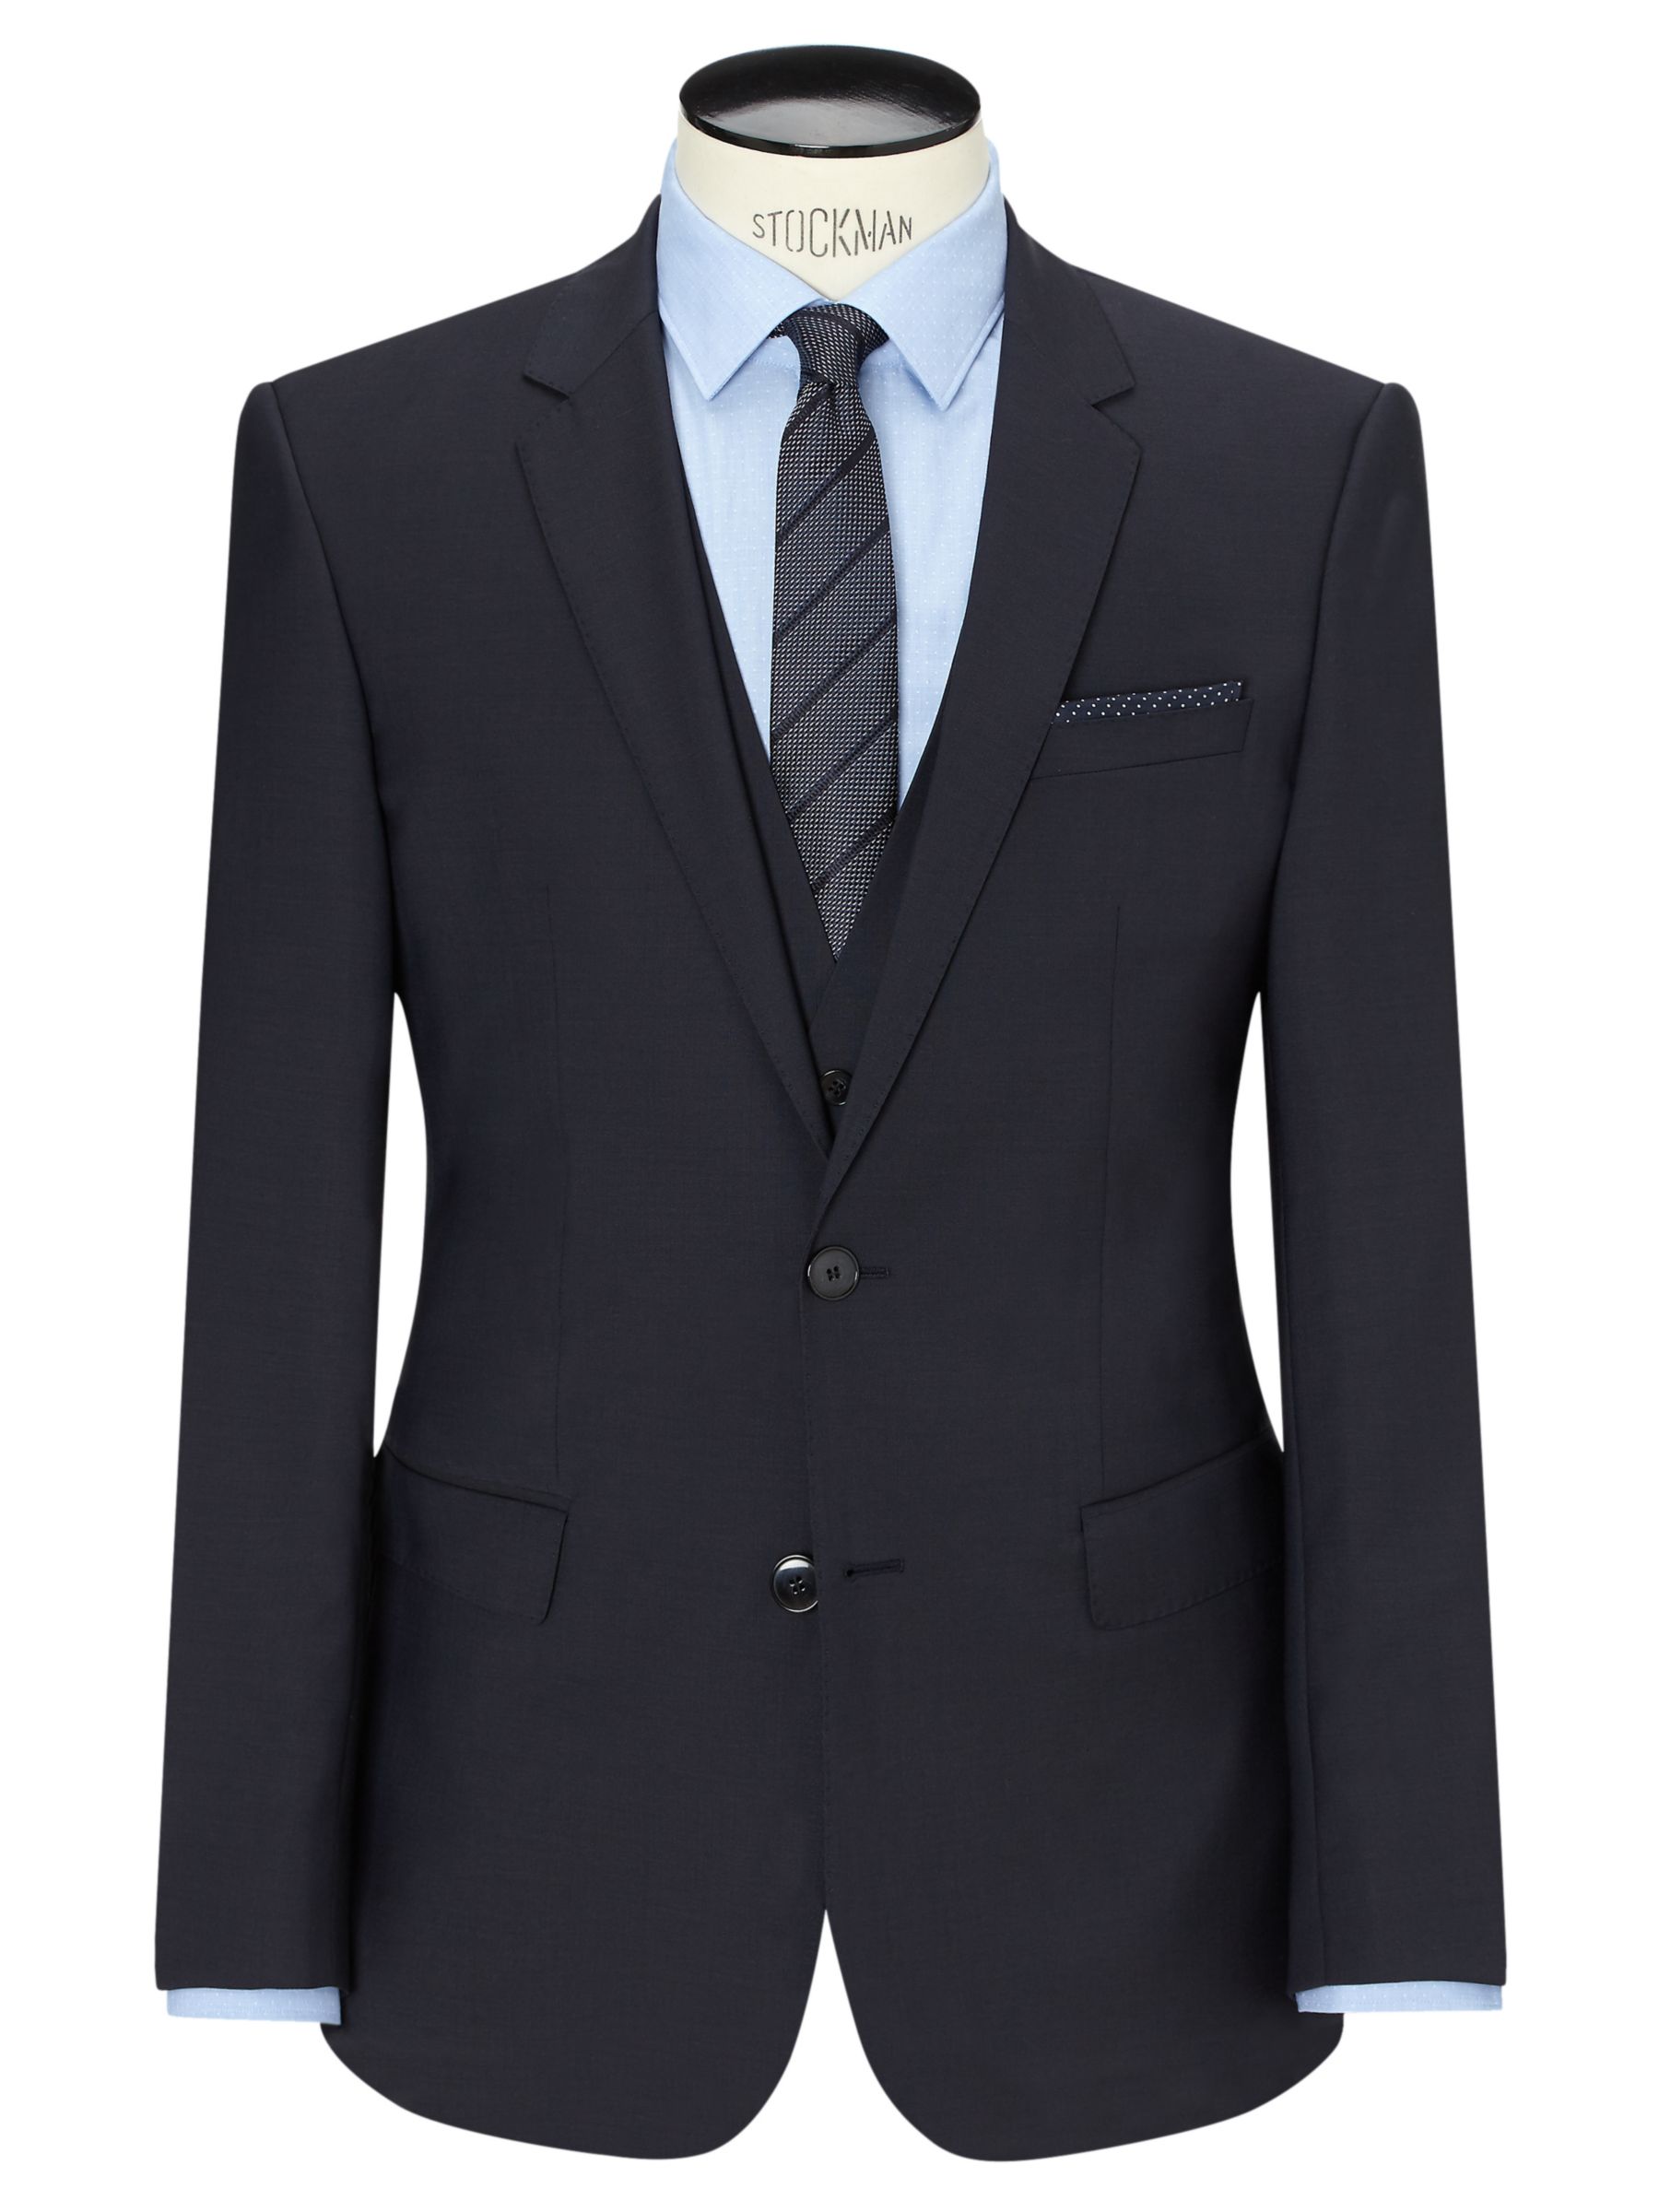 hugo boss genius suit sale